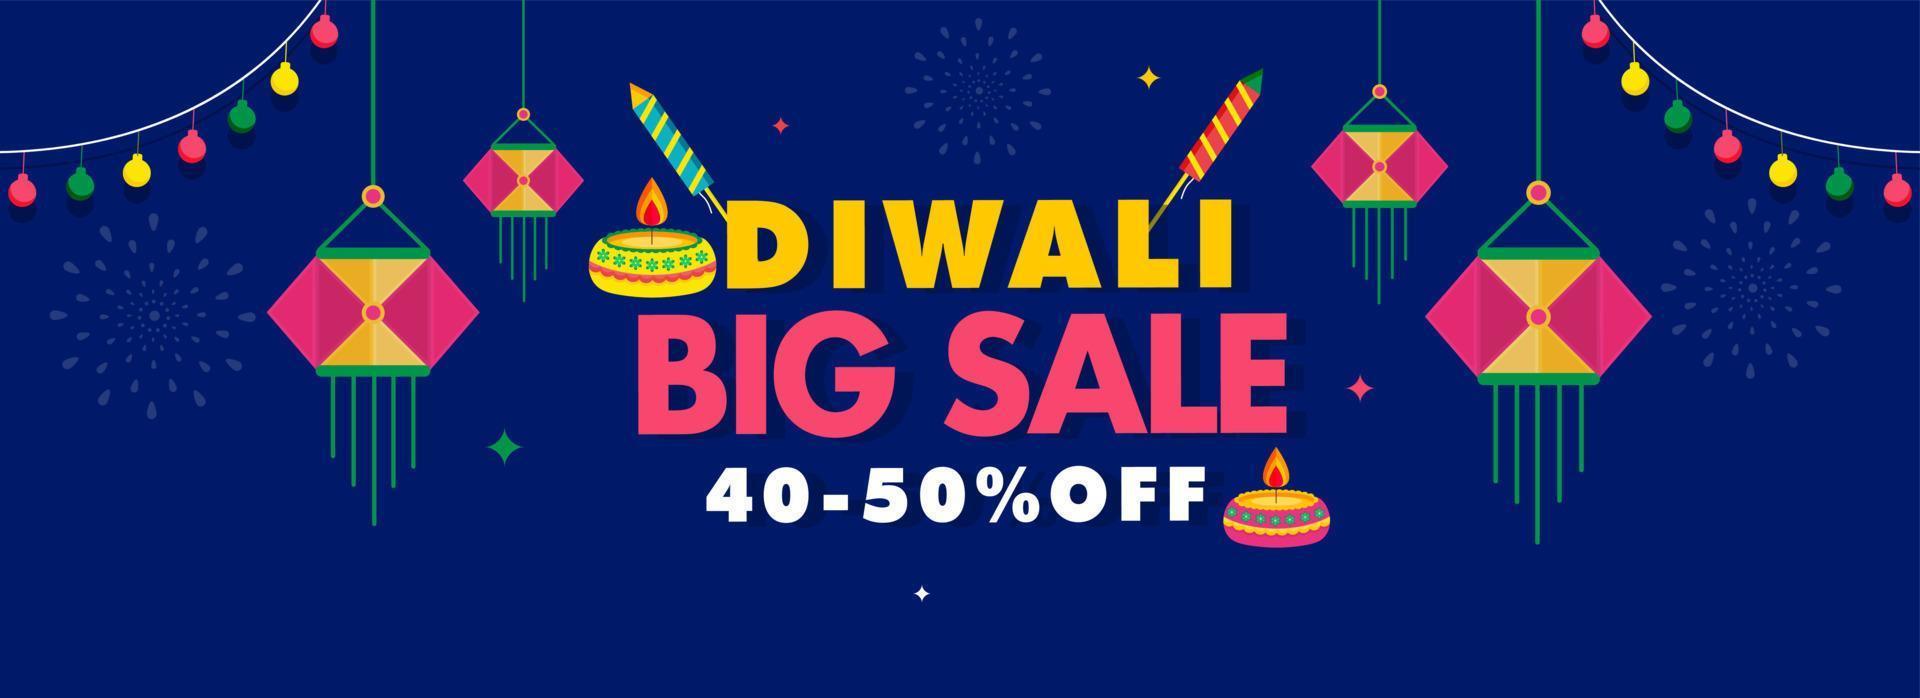 Diwali Big Sale Header or Banner Design with Discount Offer, Lit Oil Lamps Rockets, Hanging Lanterns and Lighting Garland on Blue Background. vector